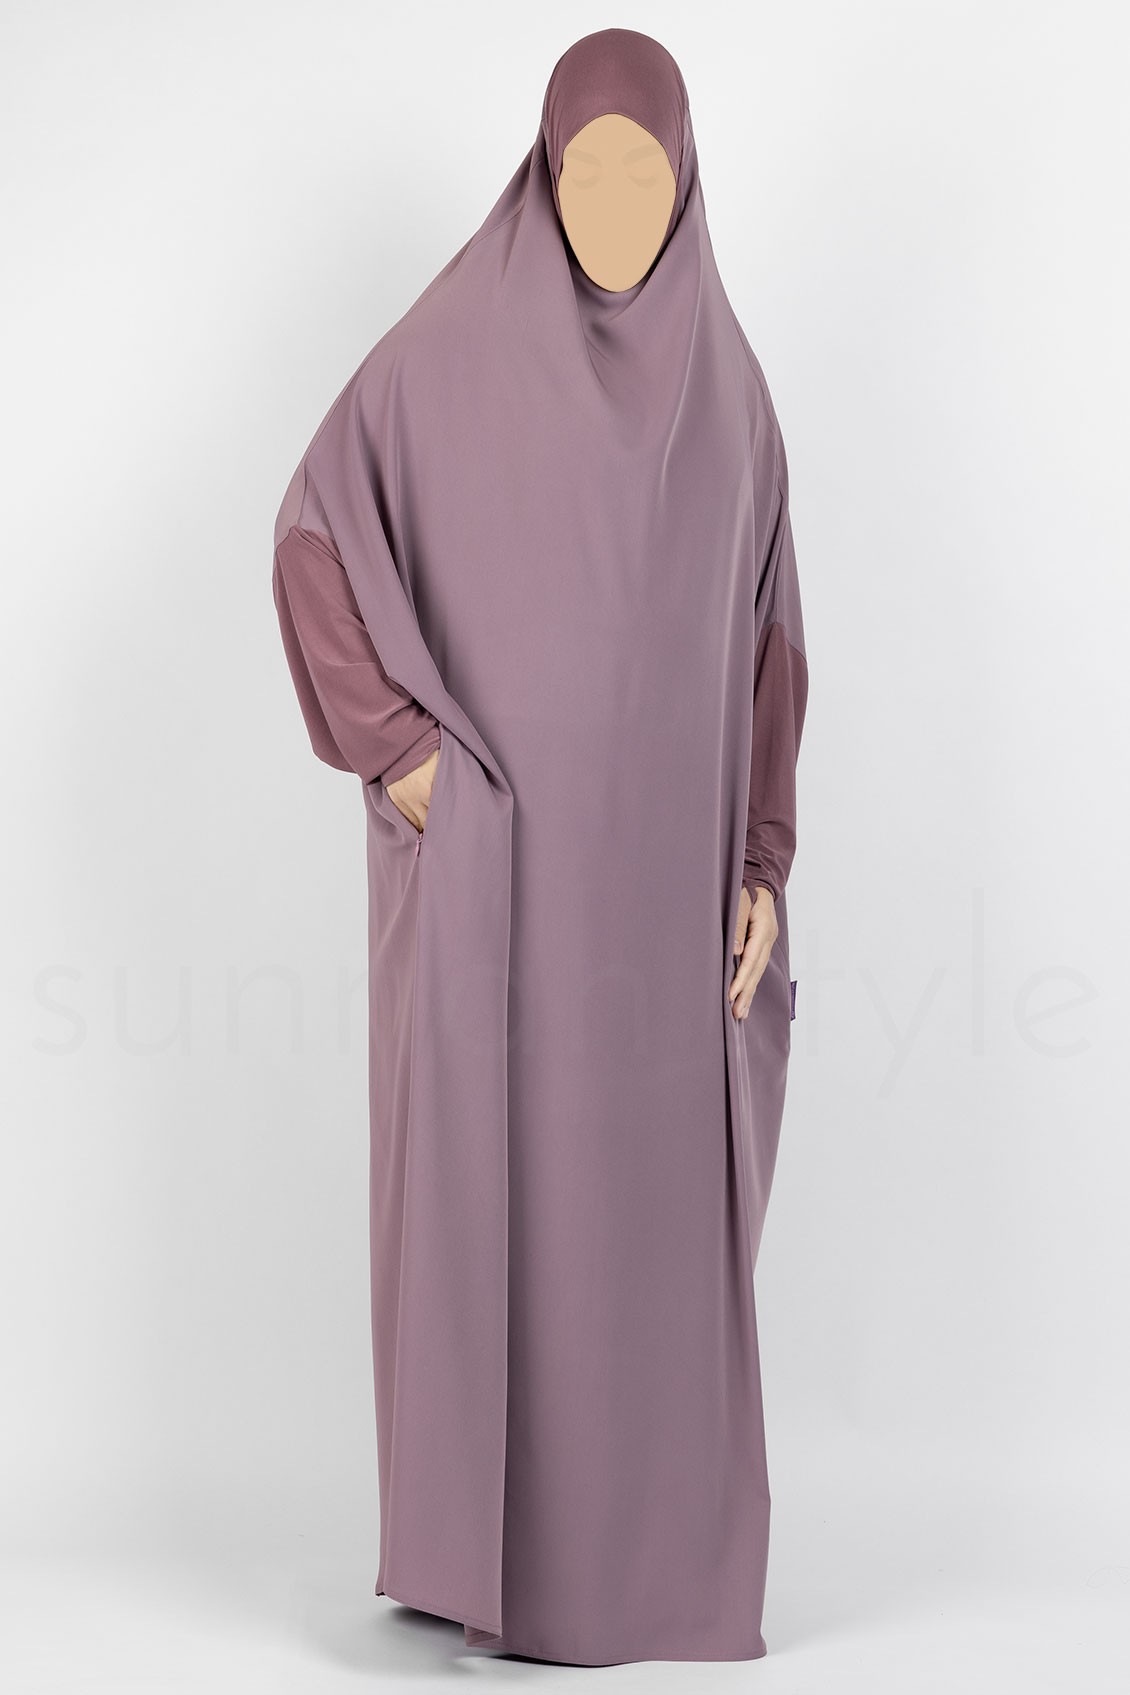 Sunnah Style Signature Full Length Jilbab Elderberry